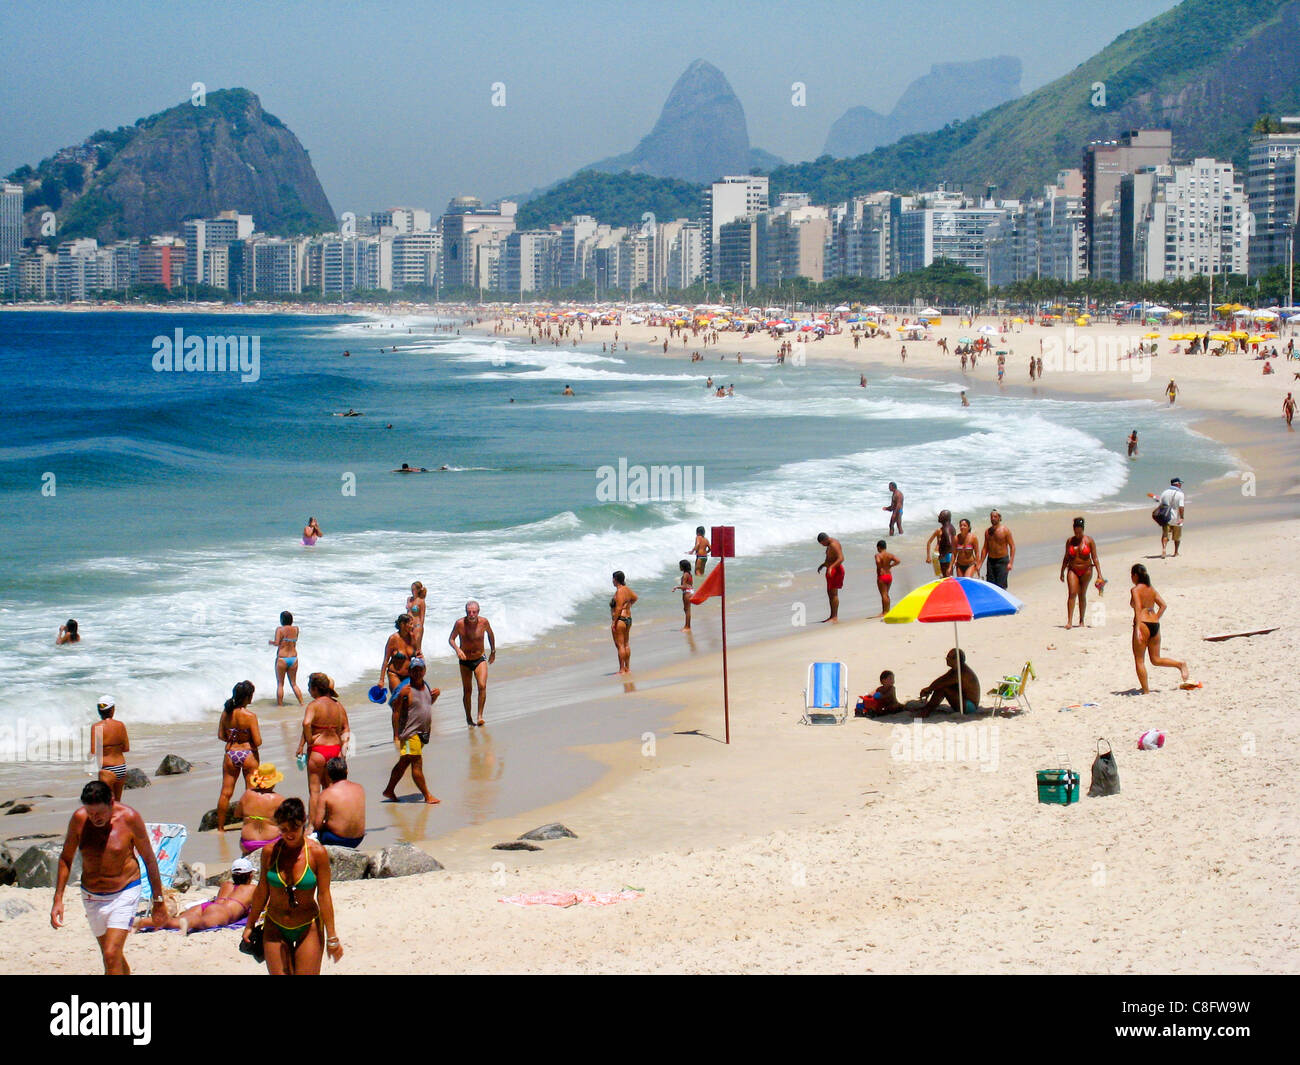 Copacabana-Strand, voller Badegäste, Sonnenanbeter und bunten Sonnenschirmen. Rio de Janeiro, Brasilien Stockfoto